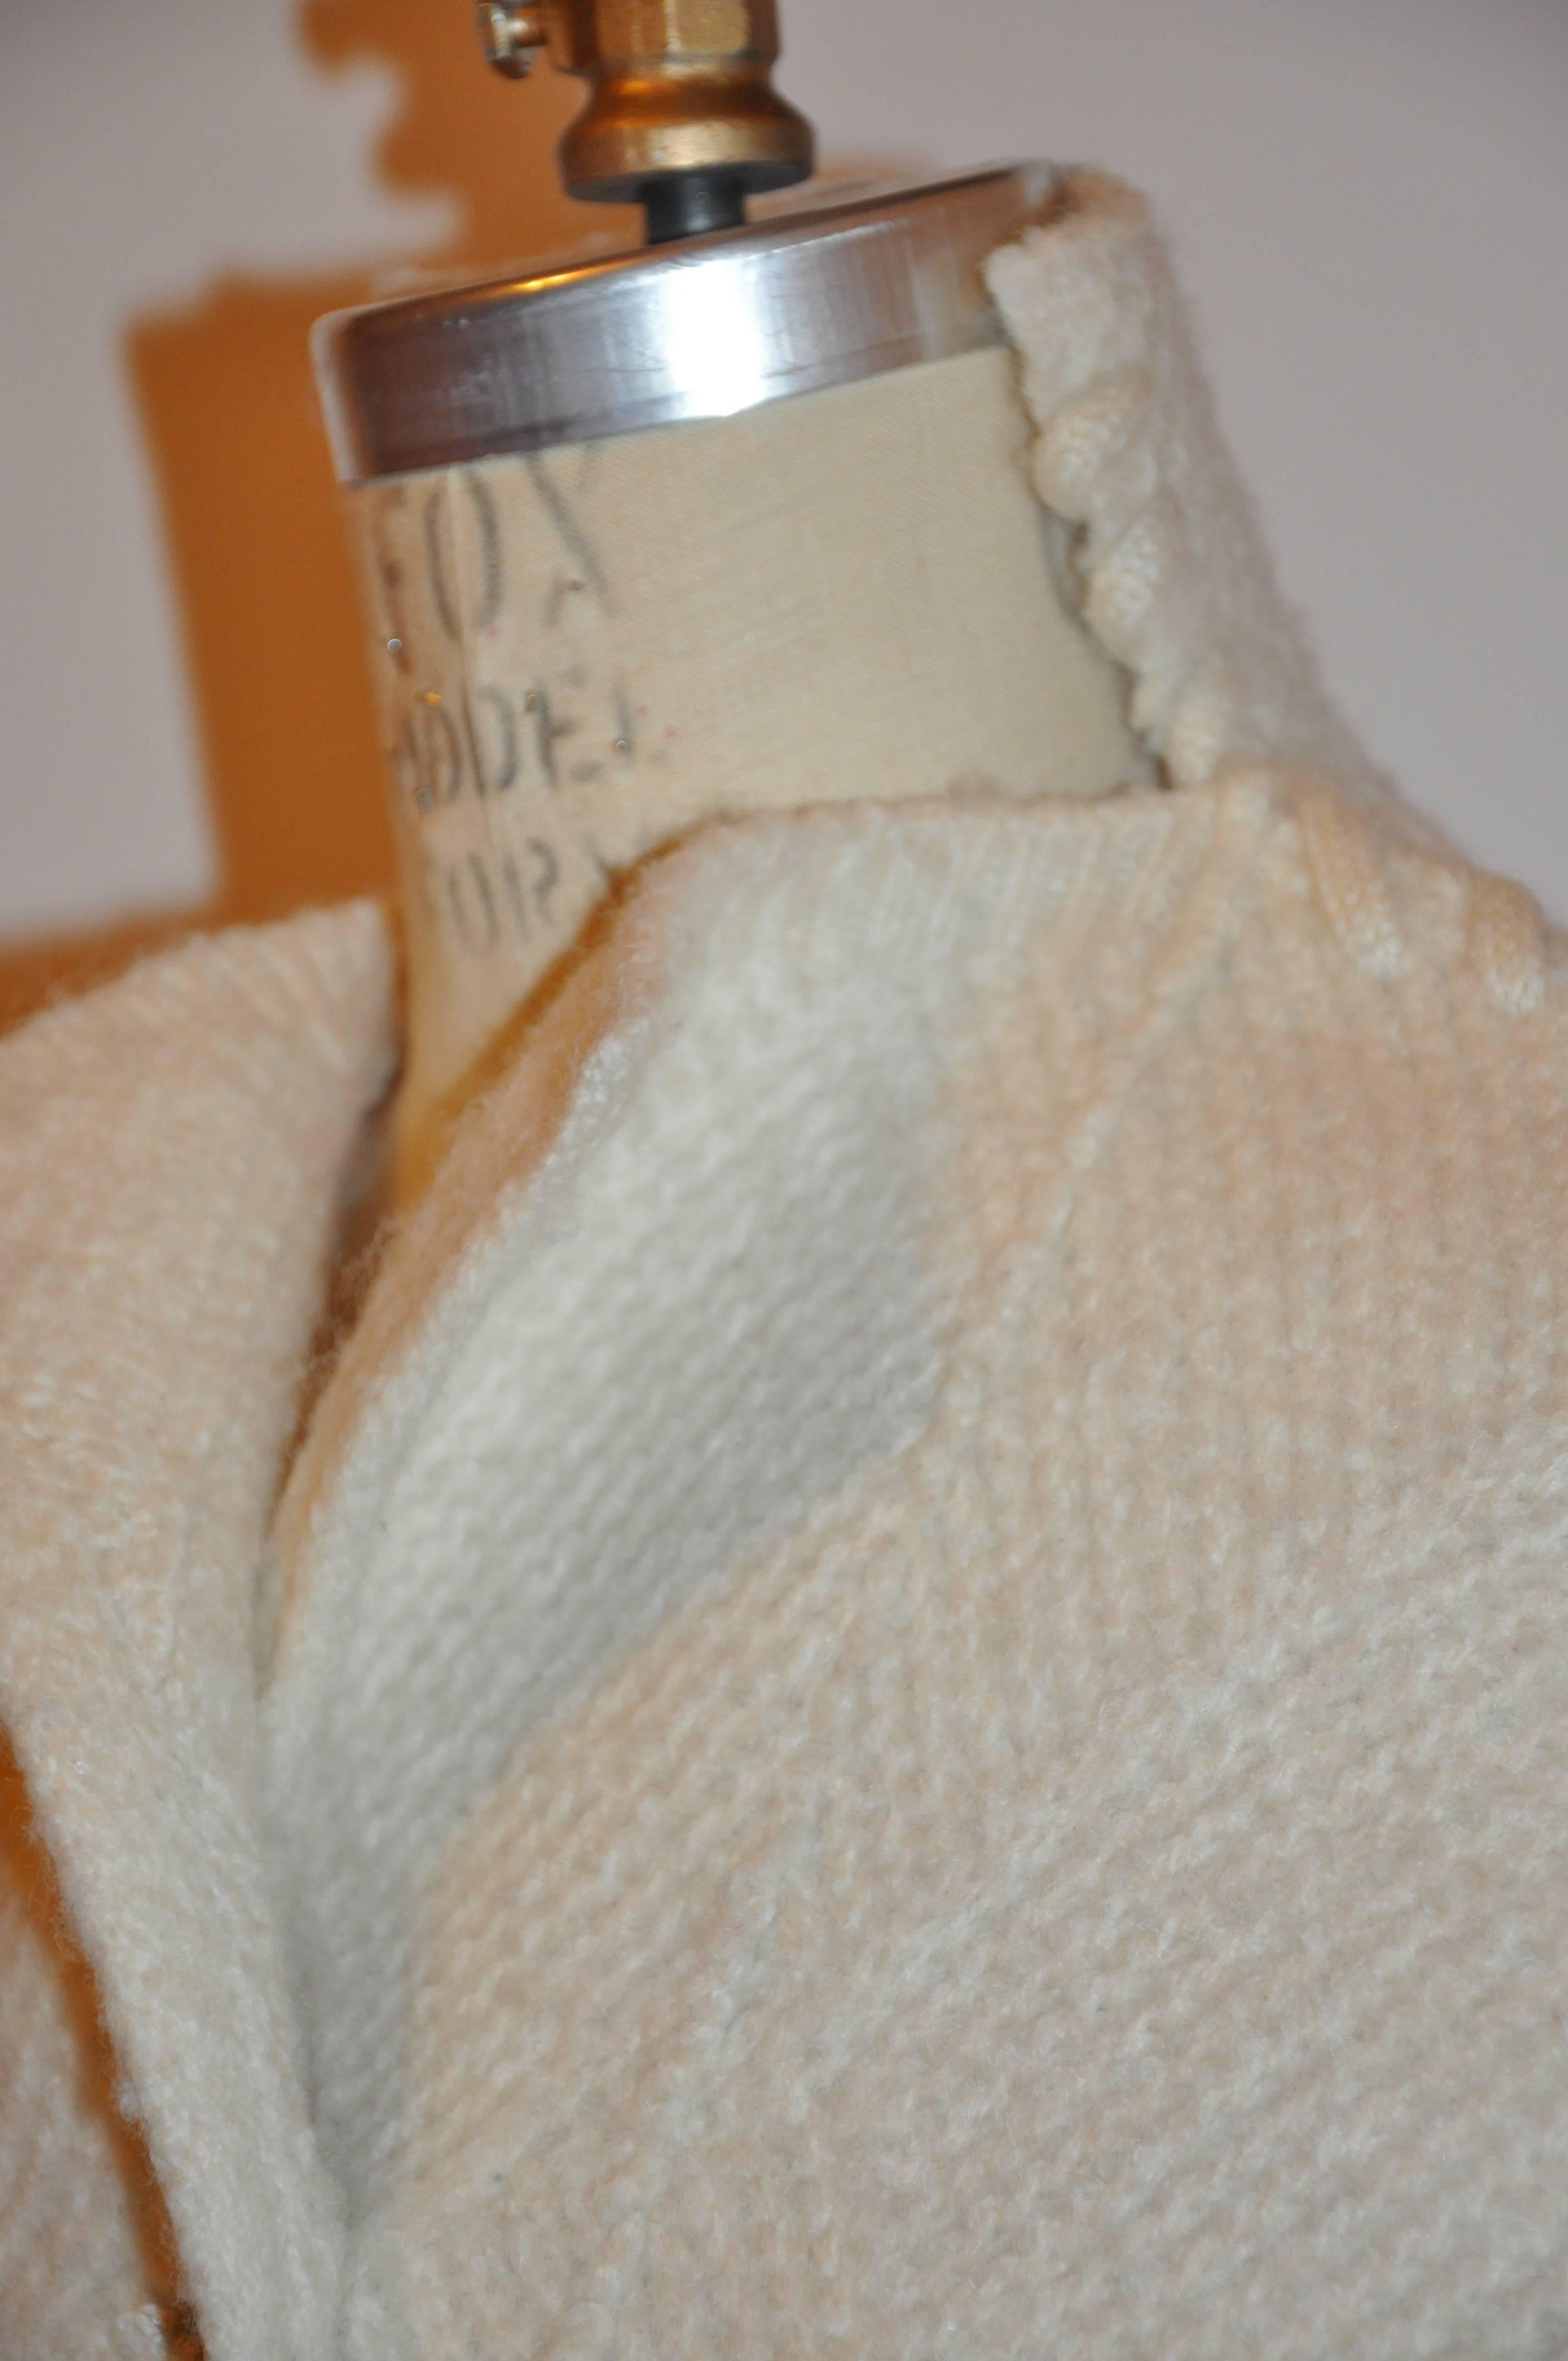 Issey Miyake - Veste en maille beige tissée « Loop Weave » Bon état - En vente à New York, NY